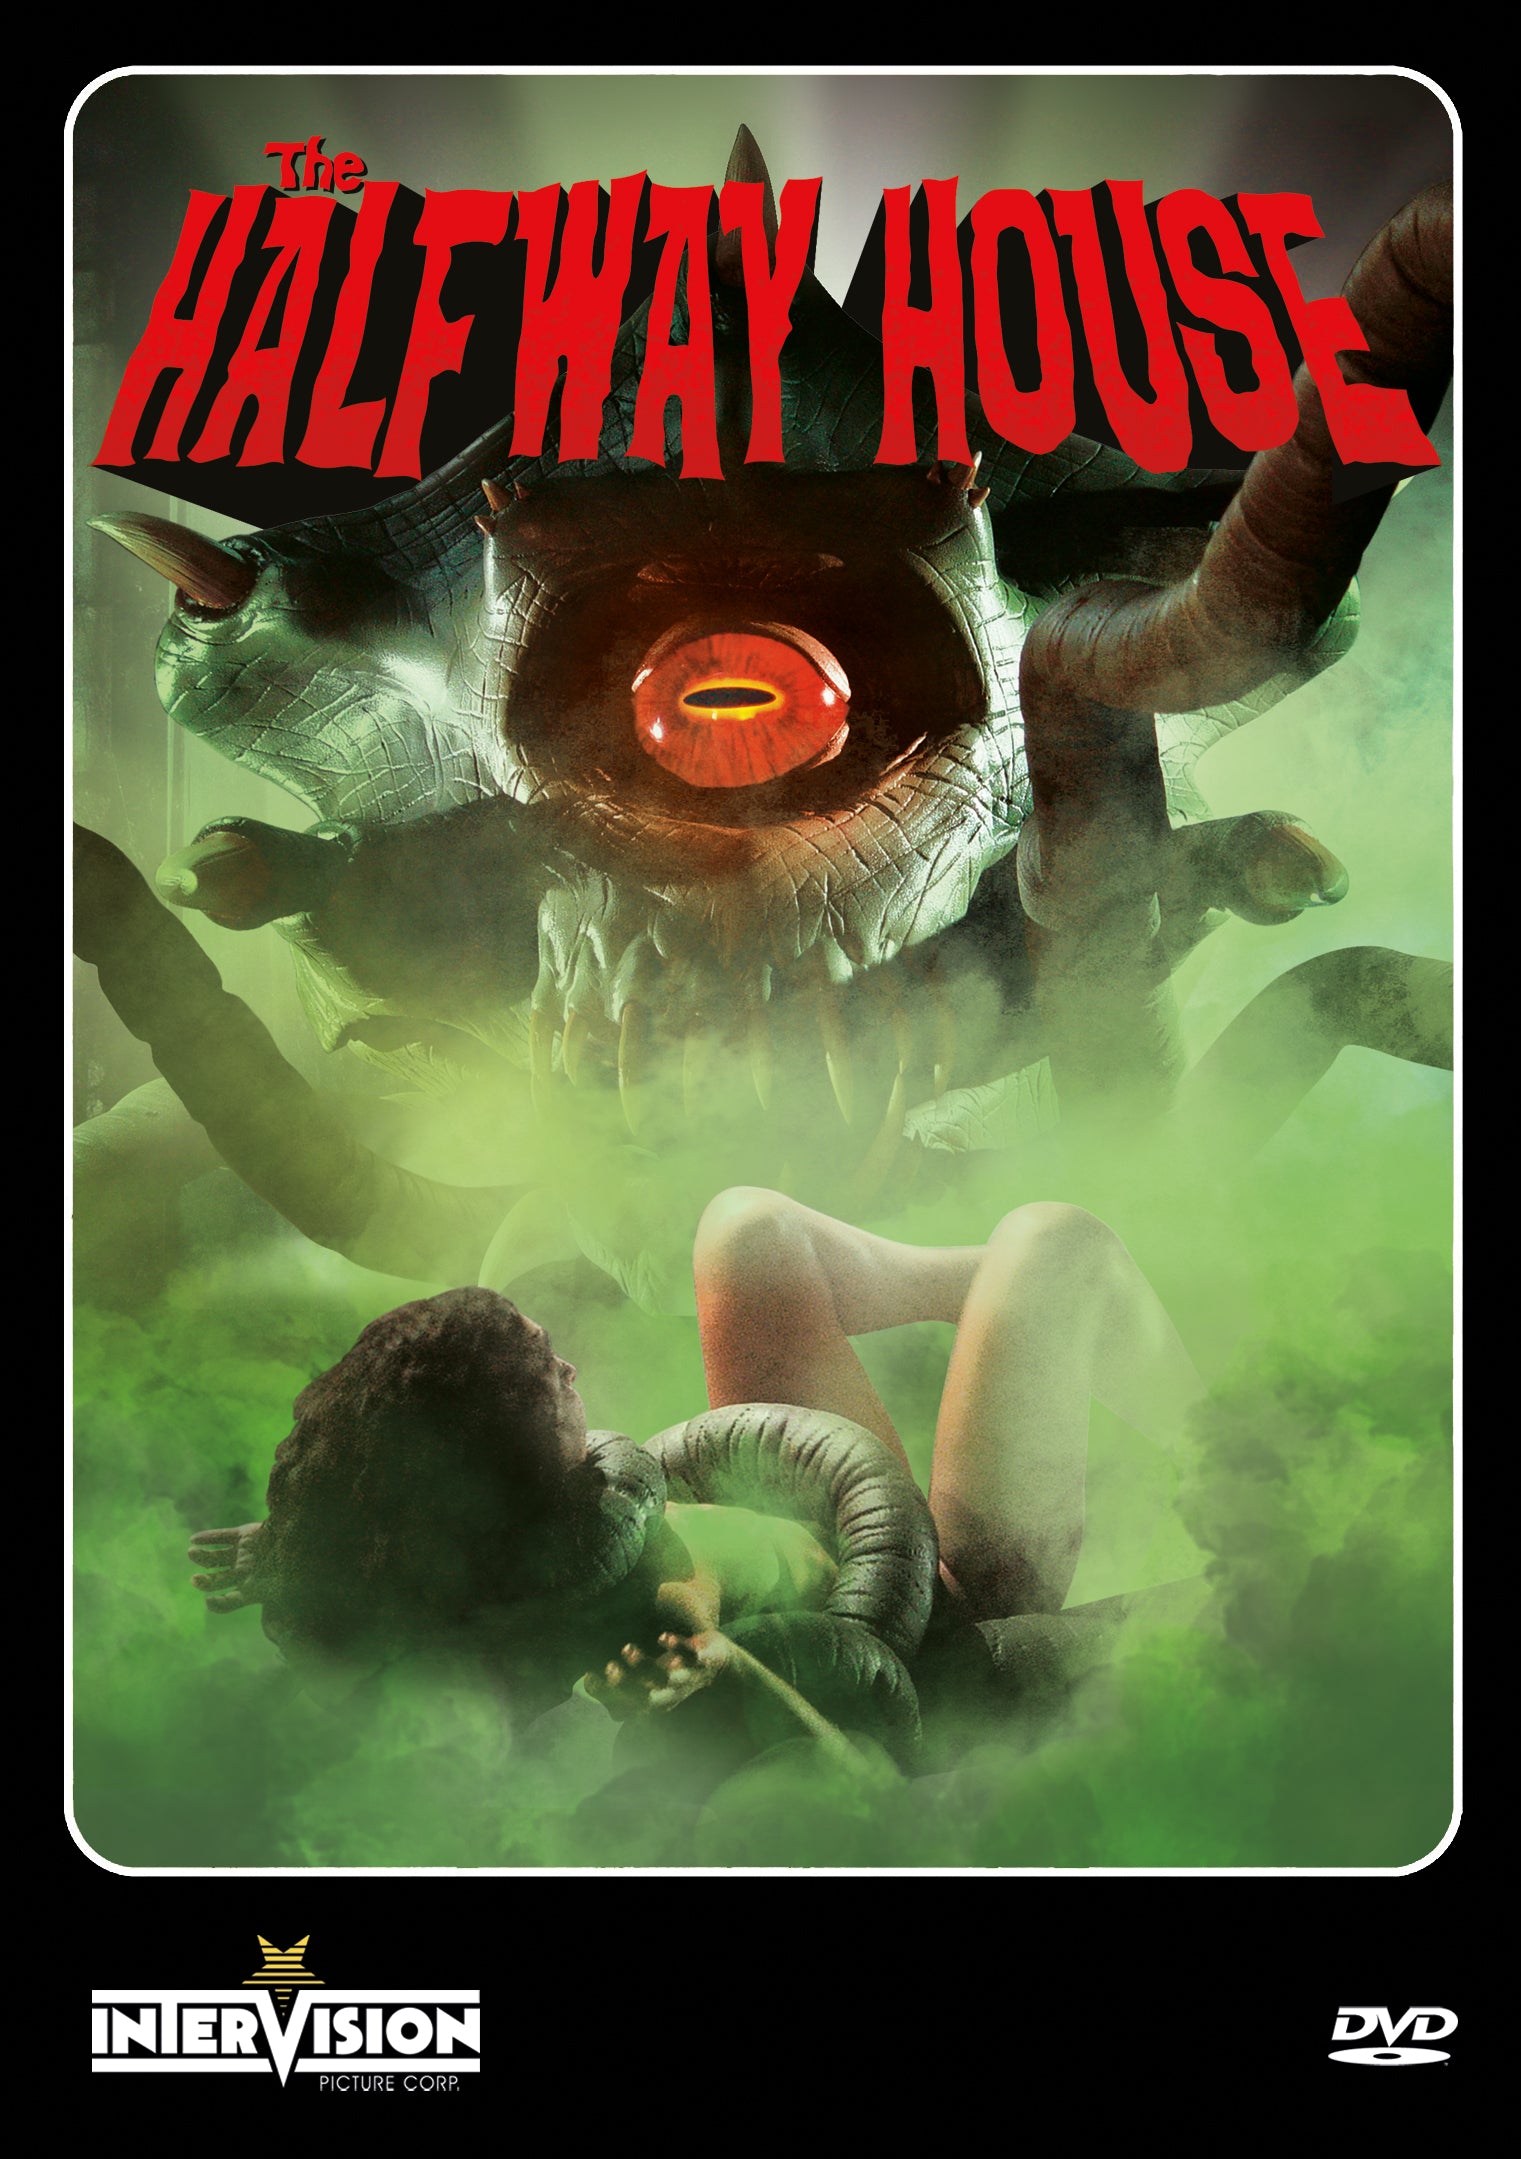 THE HALFWAY HOUSE DVD